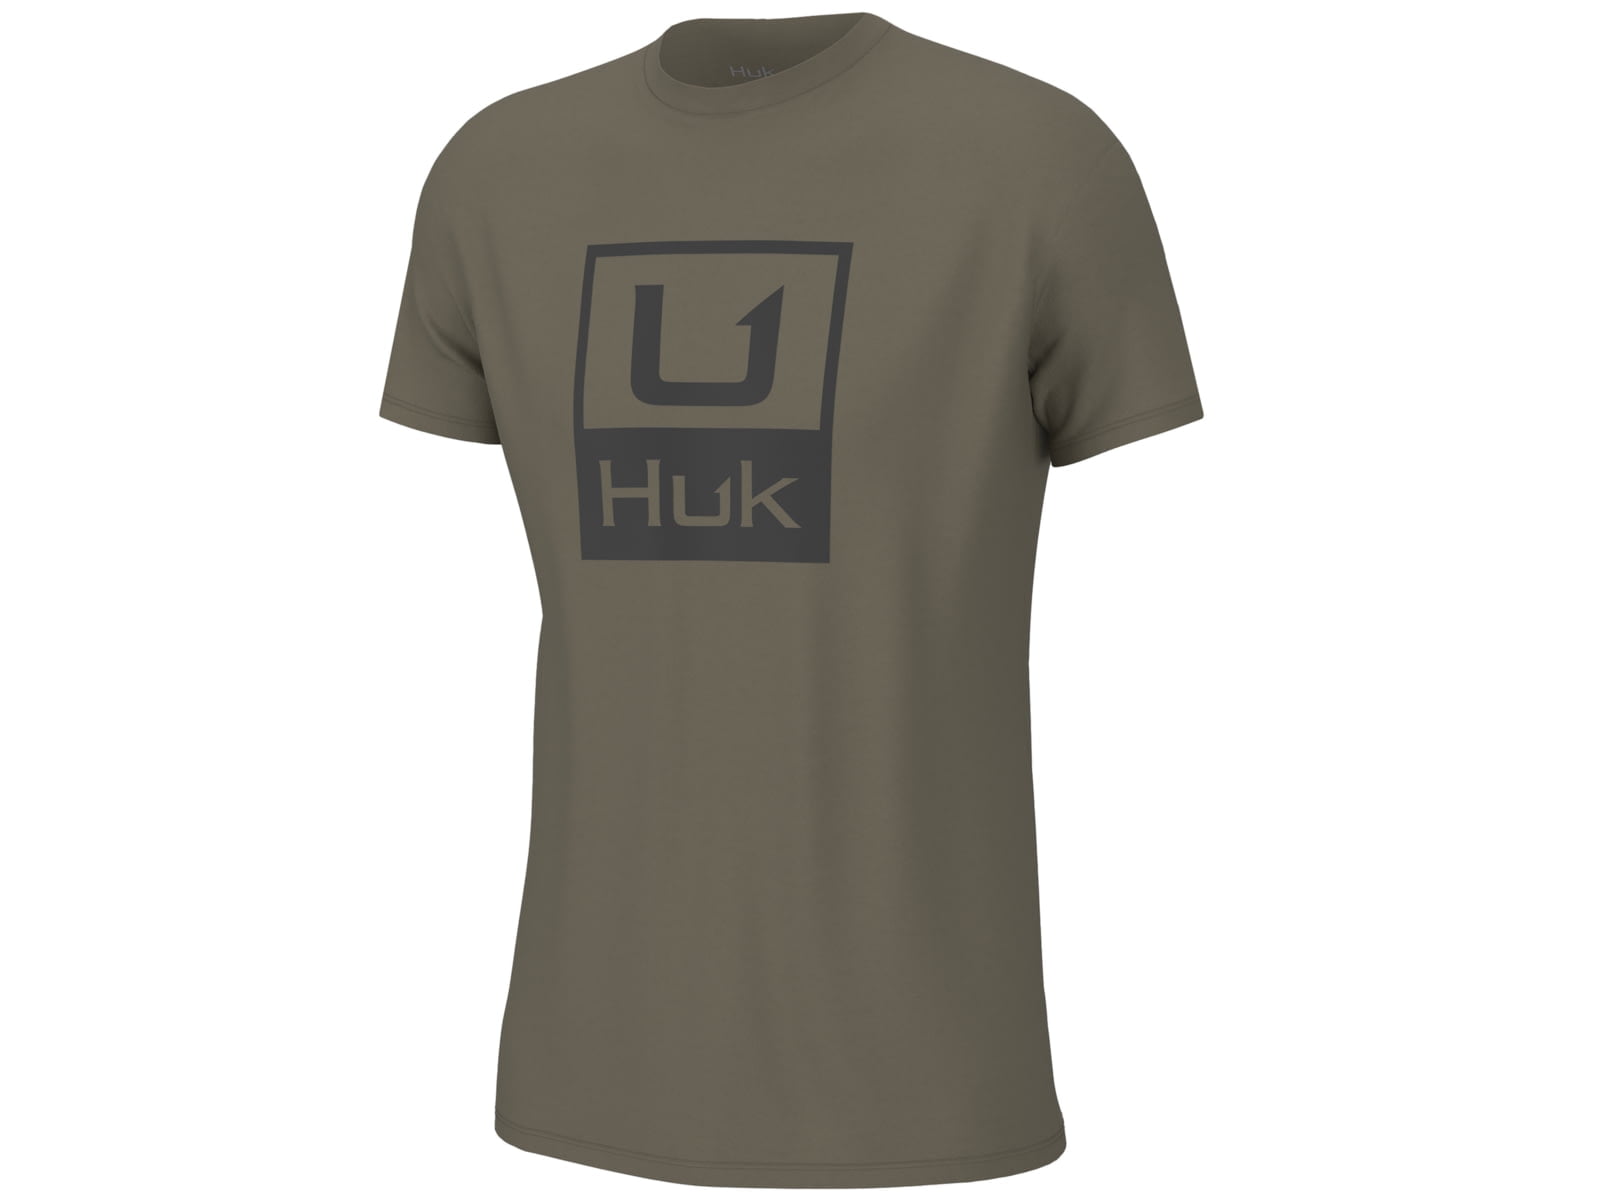 HUK Men's Standard KC Pursuit Long Sleeve Sun Protecting Fishing Shirt,  Light on Sail-Ice Blue, 3X-Large